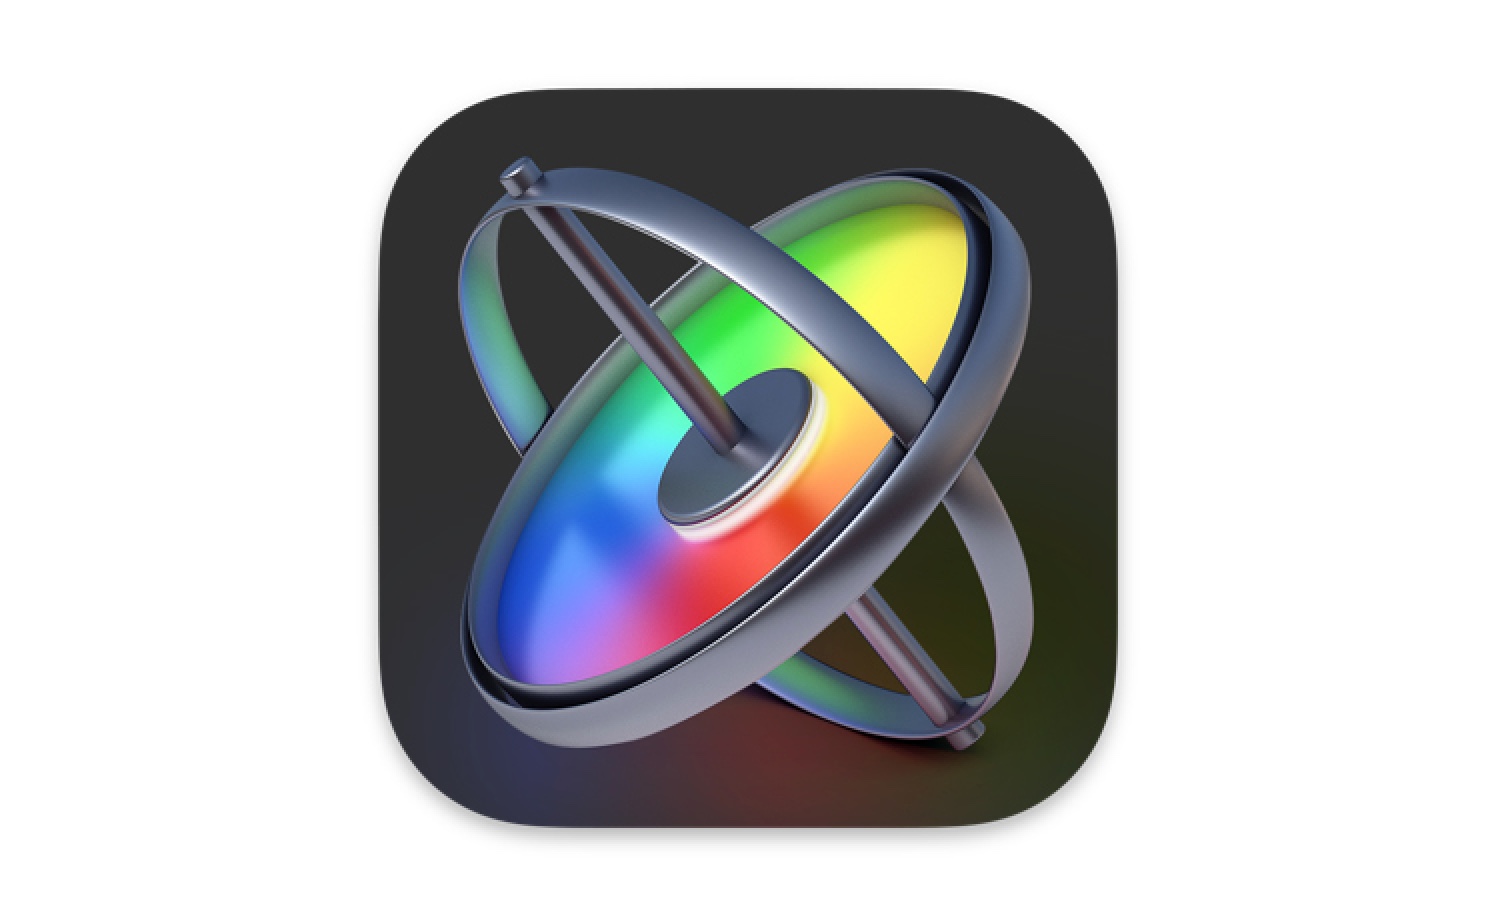 【Mac】Apple、macOS Big Sur向けに刷新されたUIの「Motion 5.5.1」をリリース